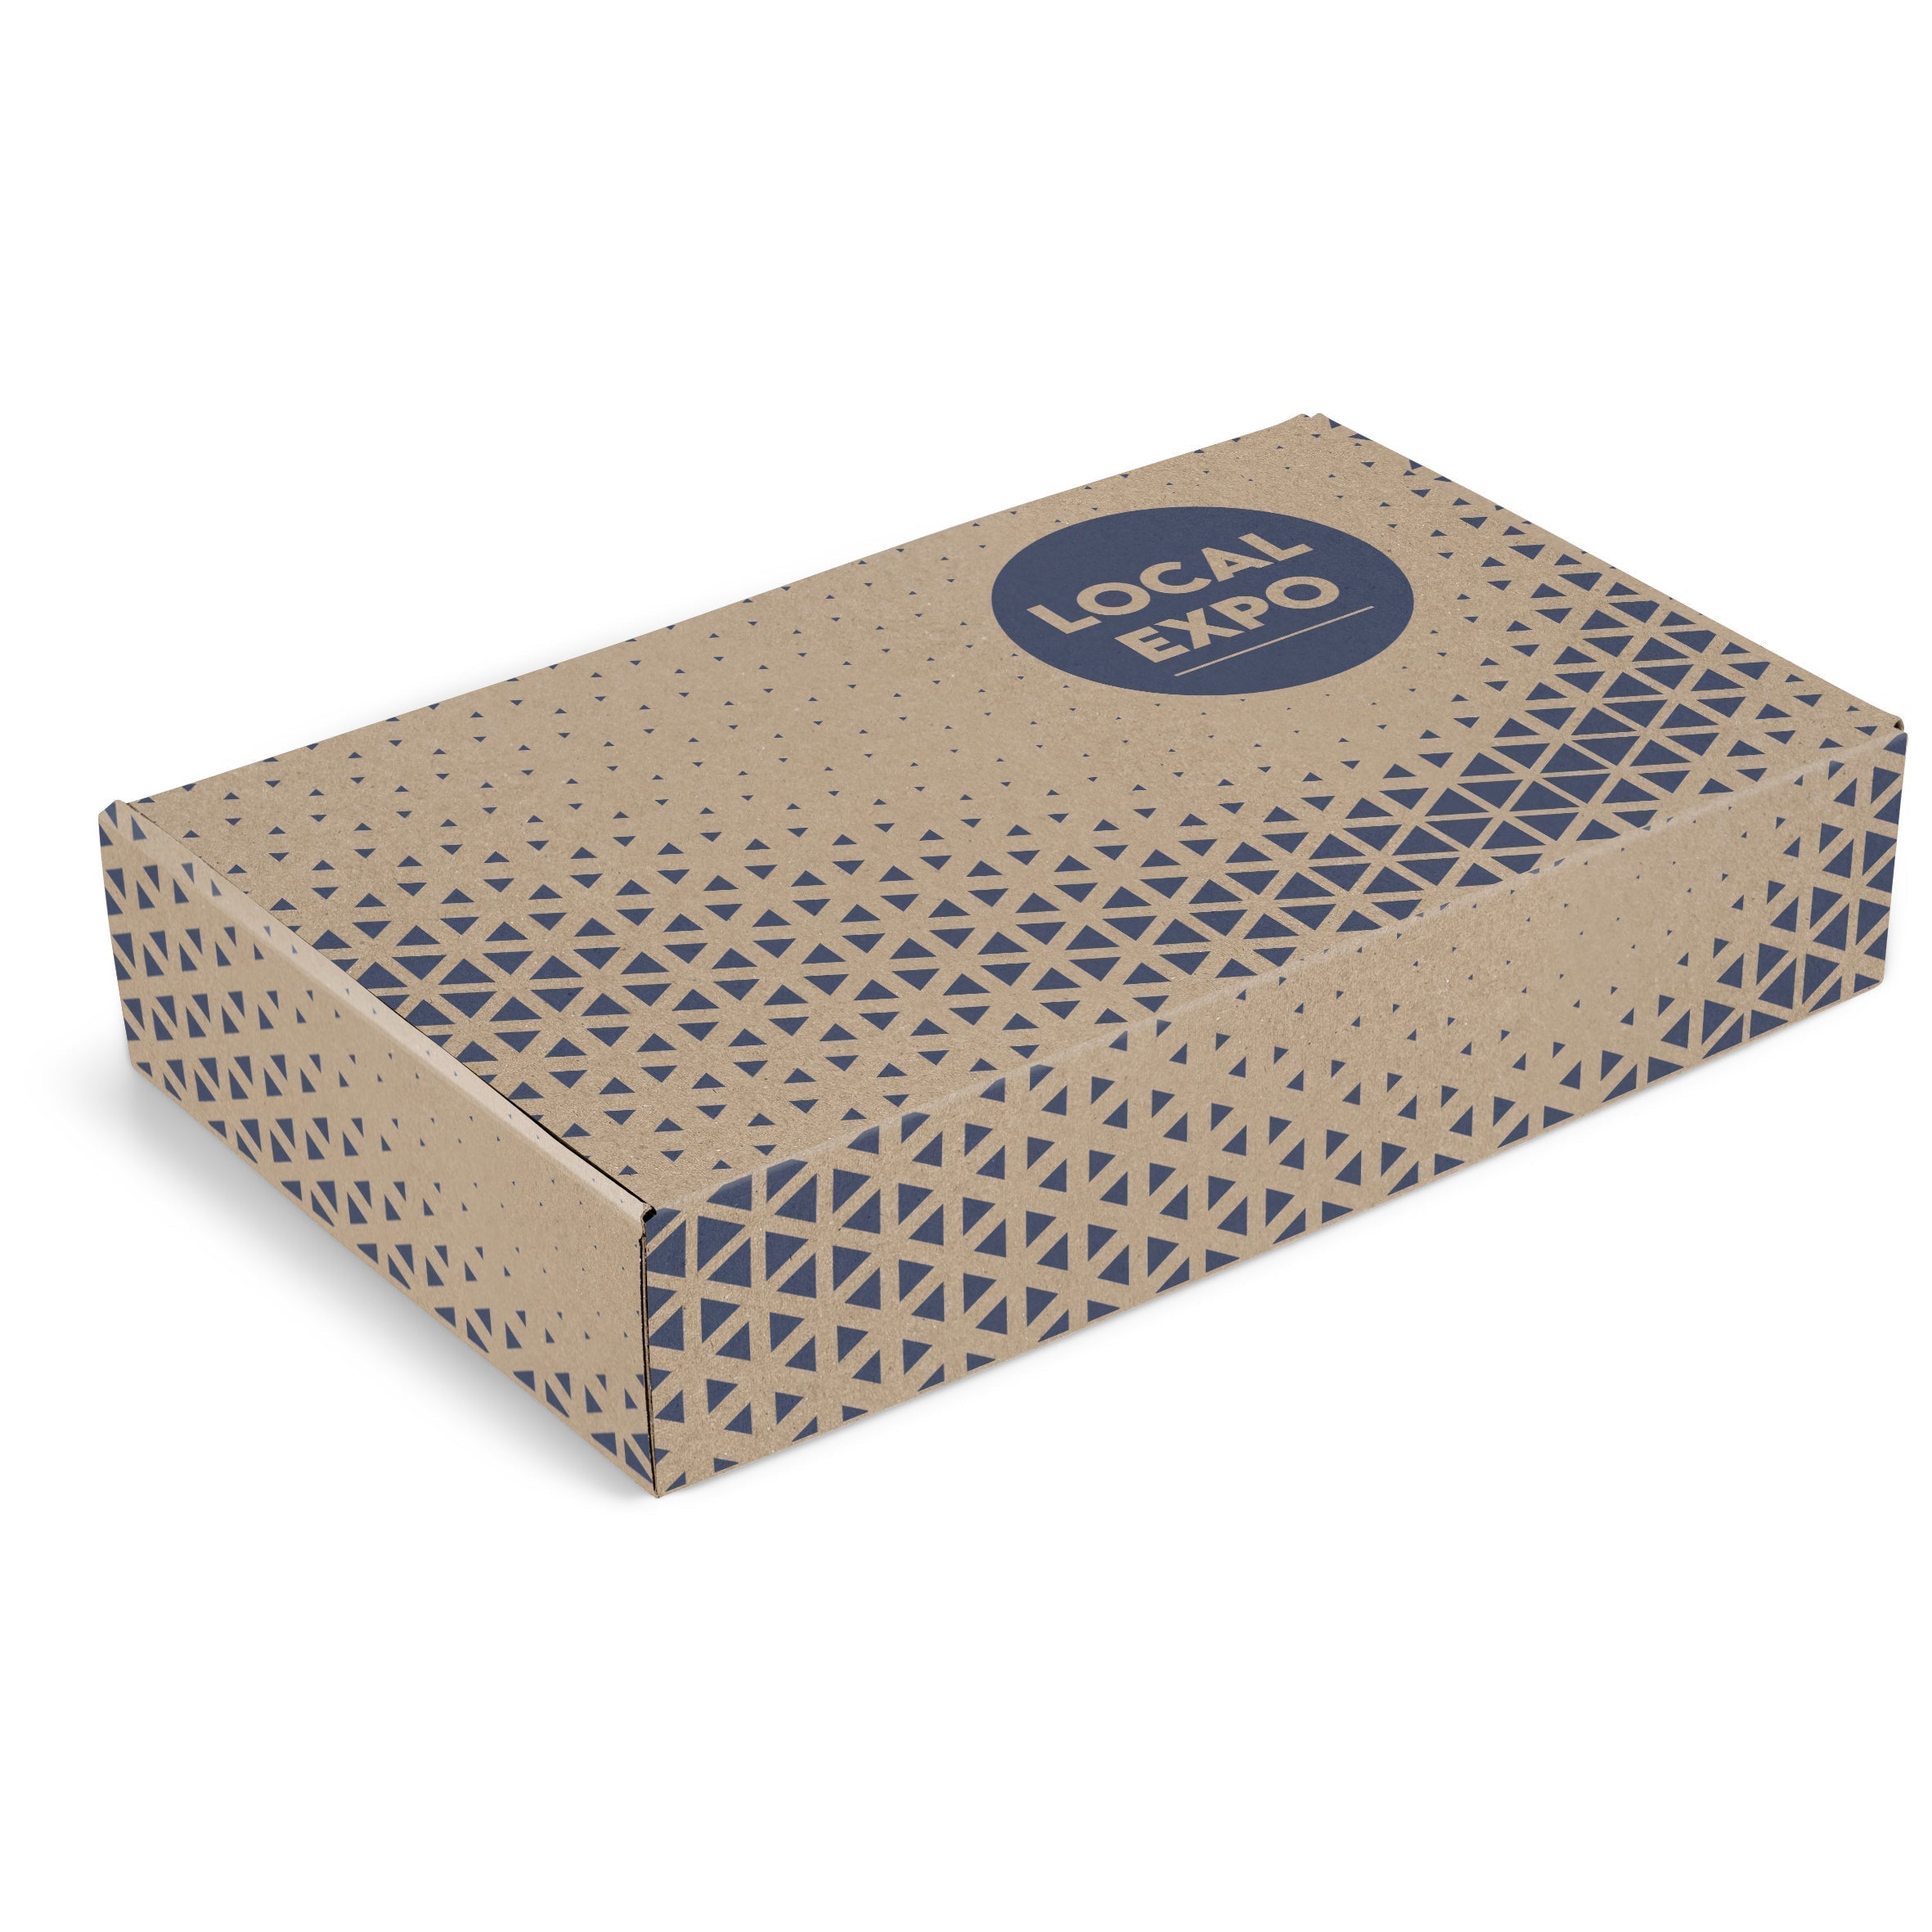 Bianca Gift Box C-Gift Boxes & Tins-Natural-NT